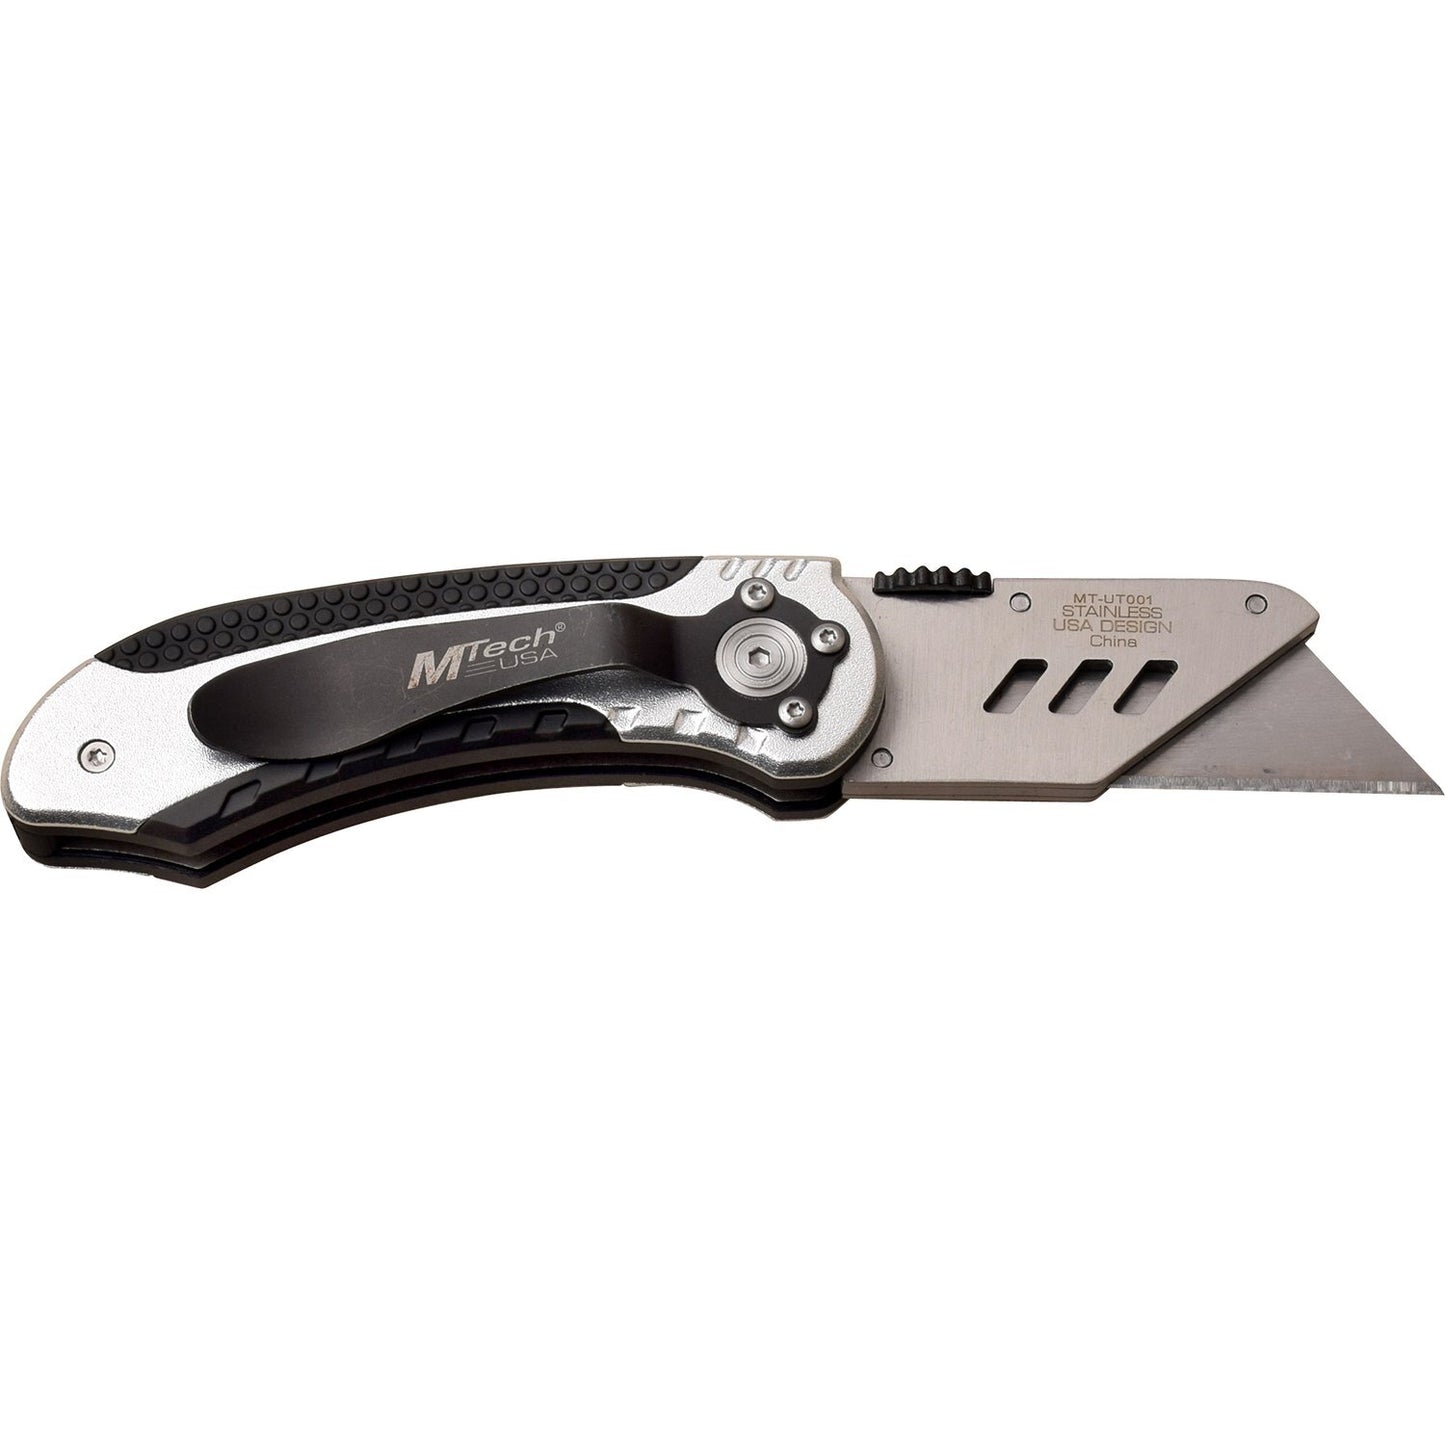 Mtech Mtech 6.25 Inch Utility Blade Button Lock Folding Knife - Silver #mt-Ut001S Black